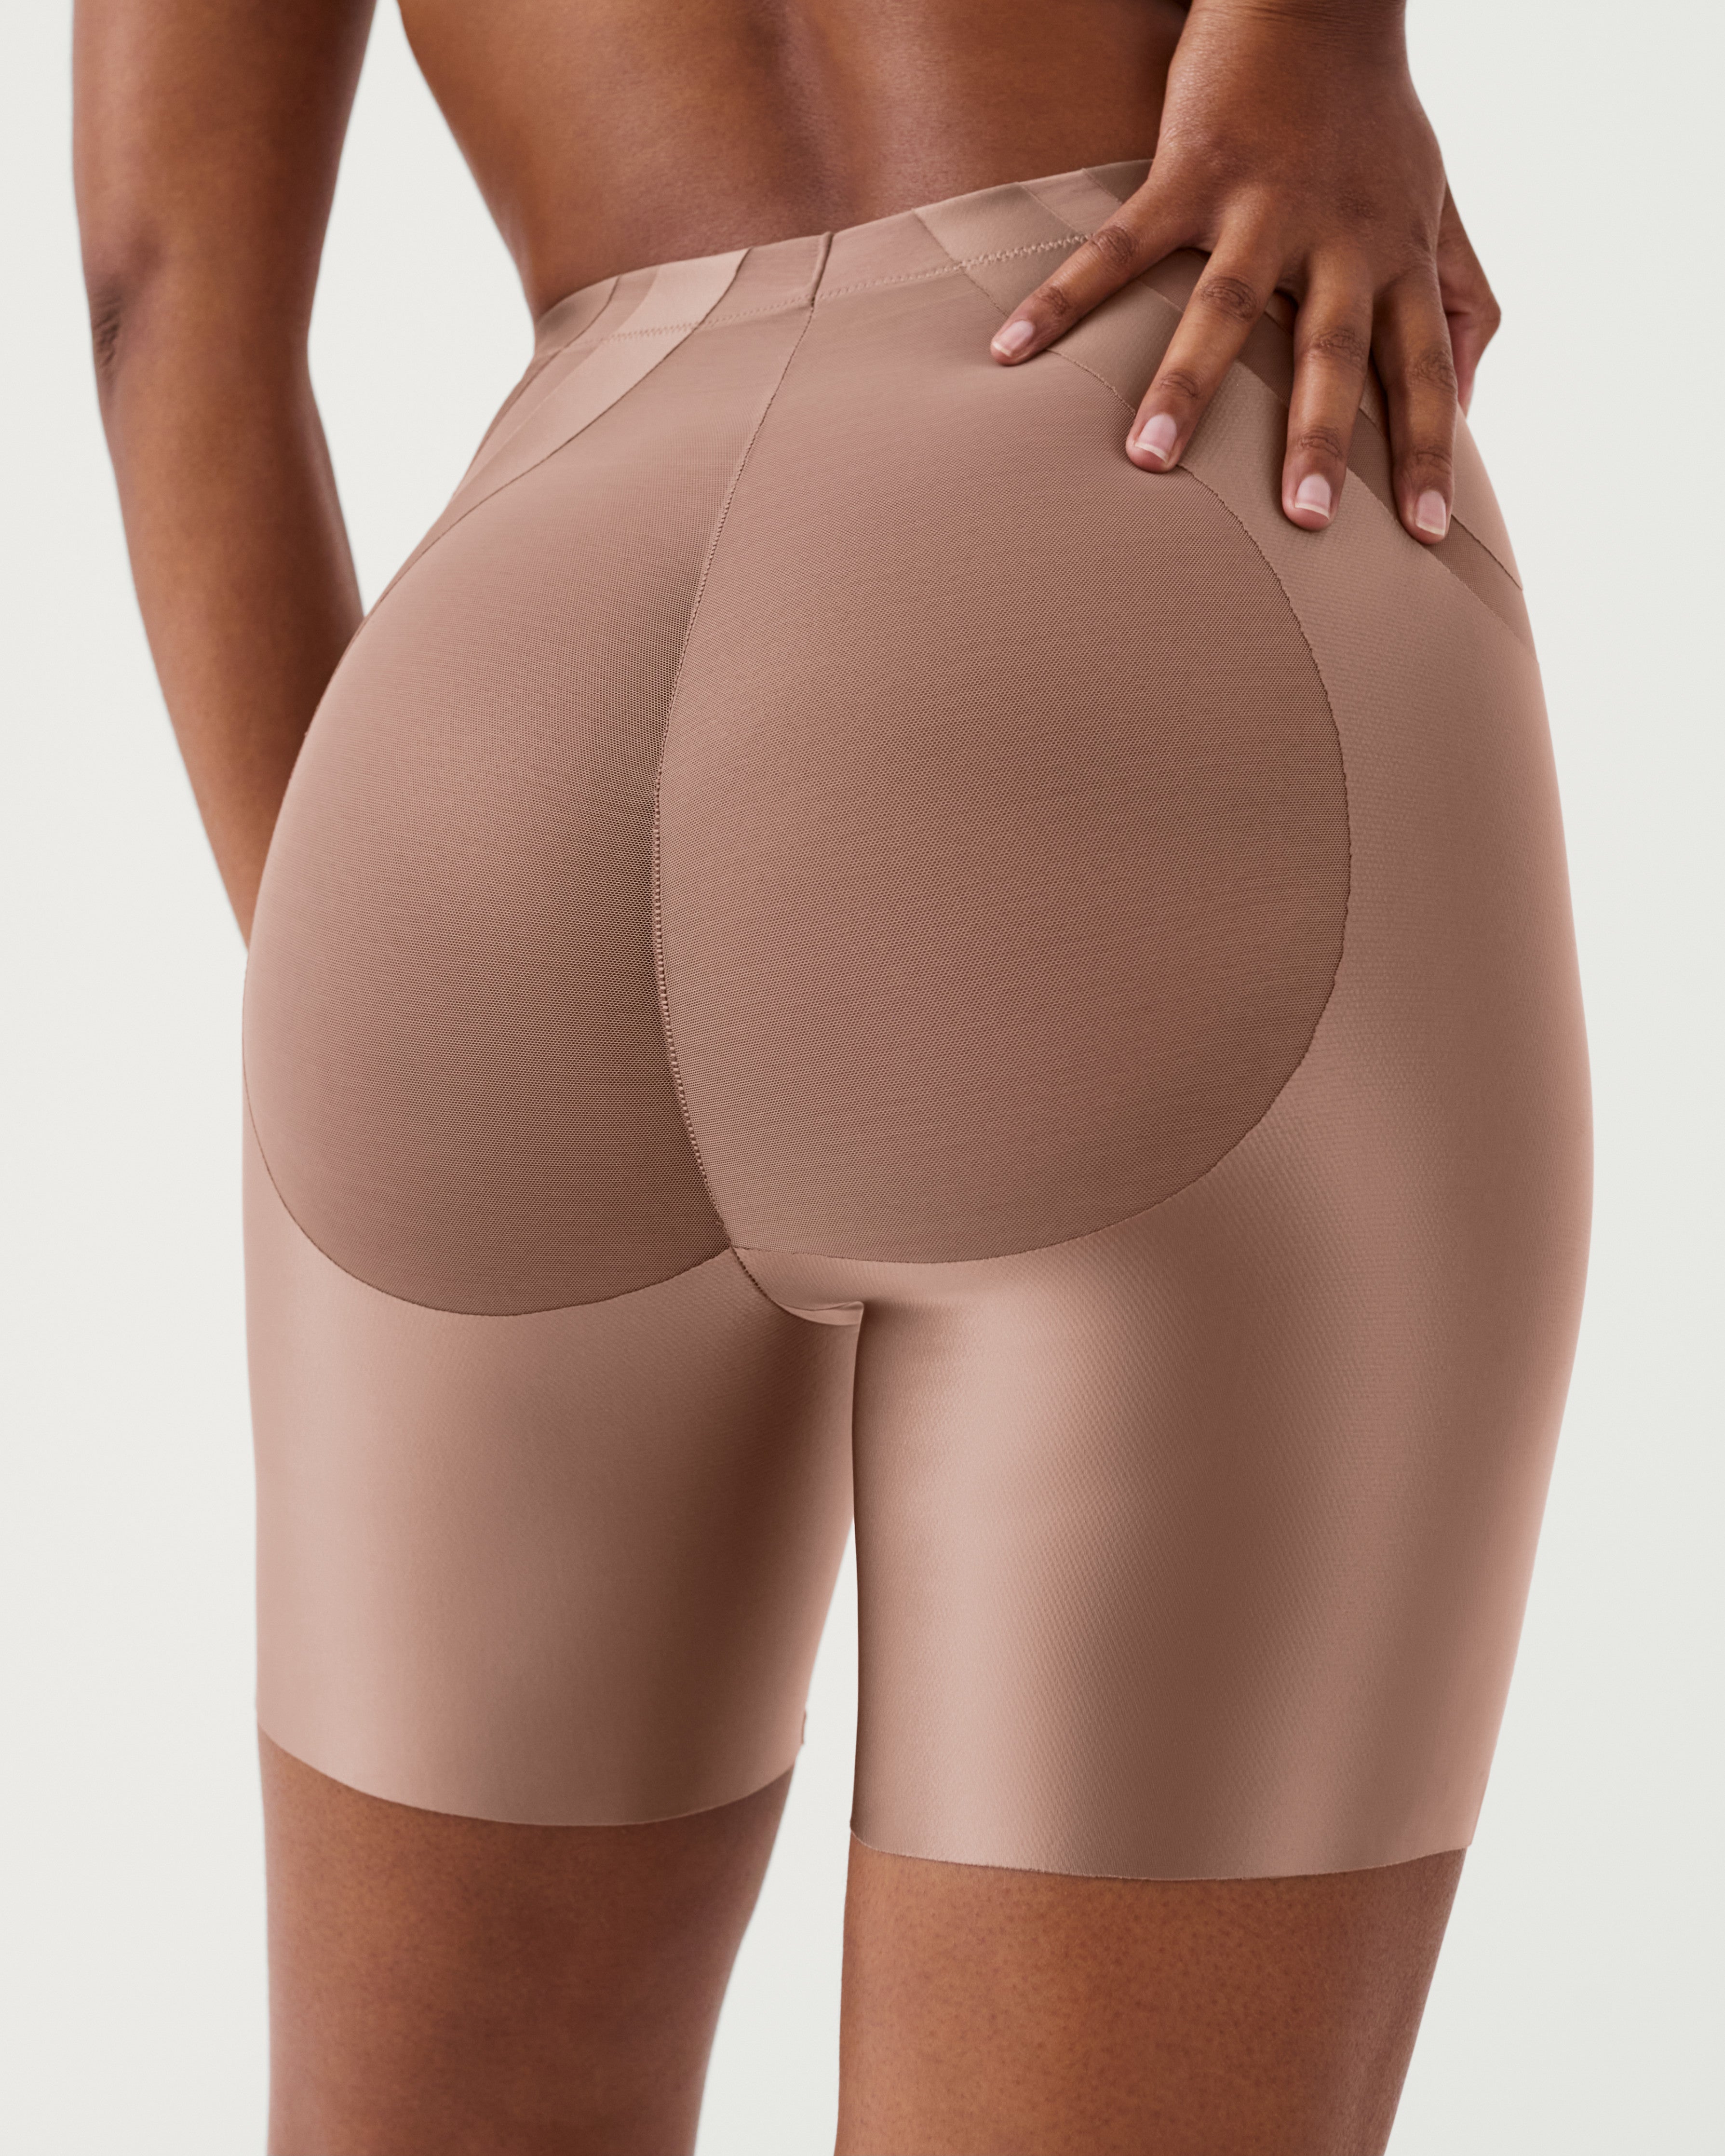 Spanx Butt Lifter/Enhancer, Women's Fashion, New Undergarments